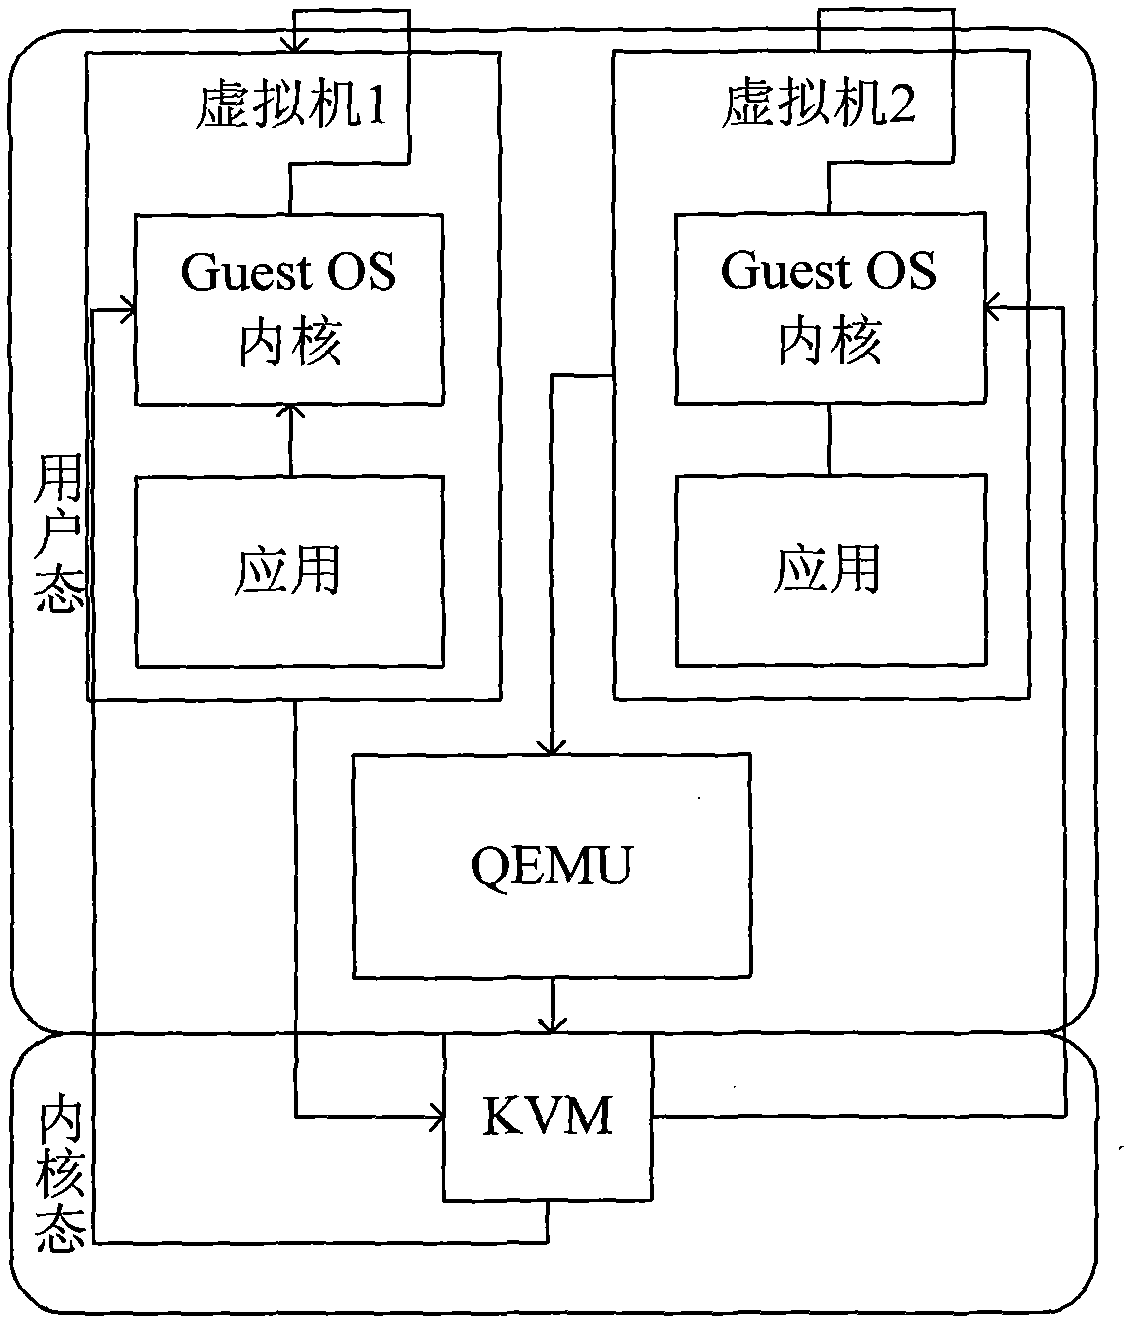 Method for implementing organizational architecture mode of kernel-based virtual machine (KVM)